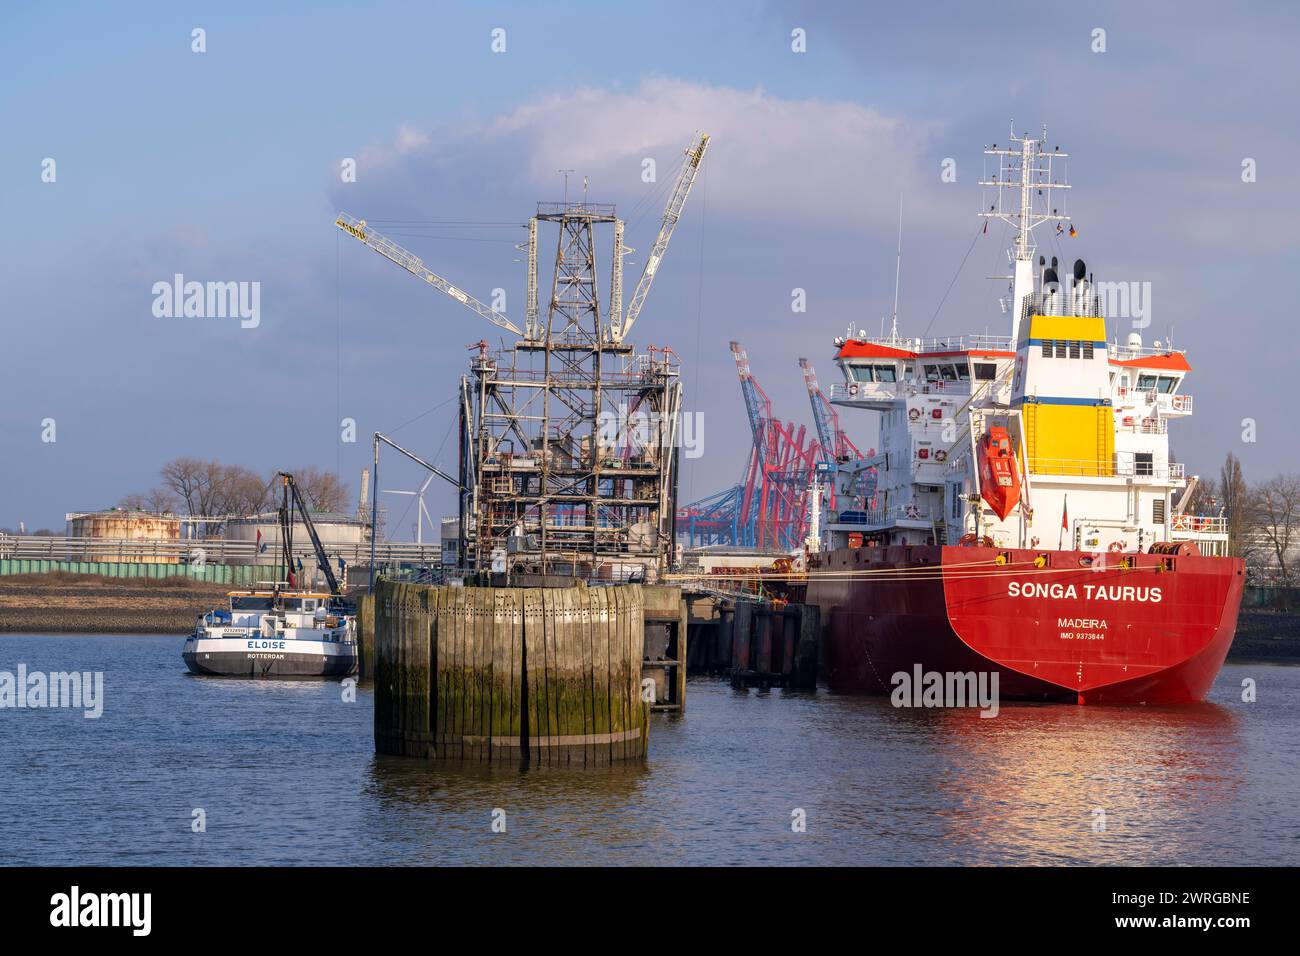 Porto di Amburgo, Elba, traffico marittimo, Ölfleethafen, autocisterne, Amburgo, Germania Foto Stock